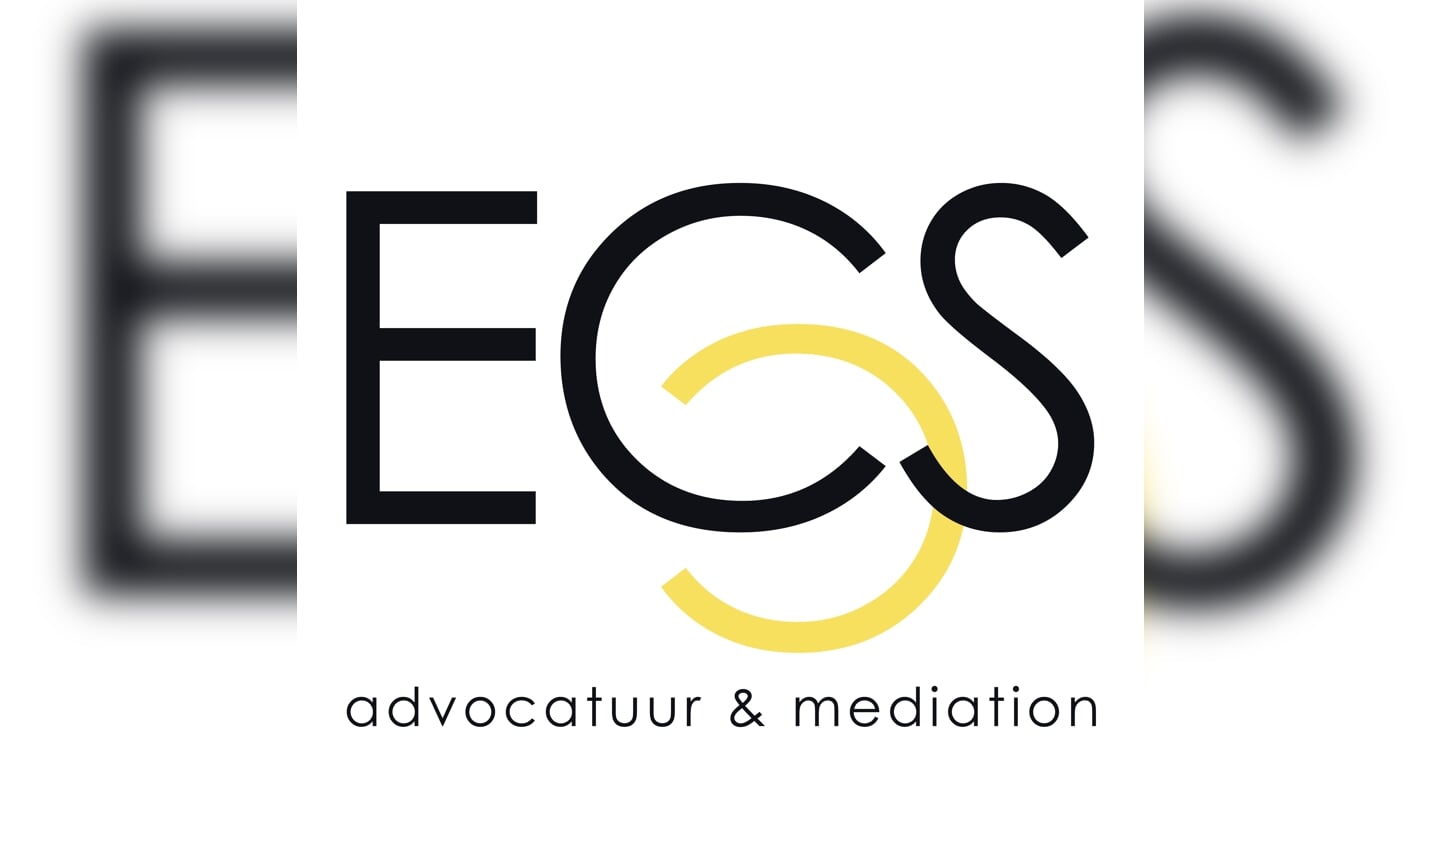 ECS advocatuur & mediation 